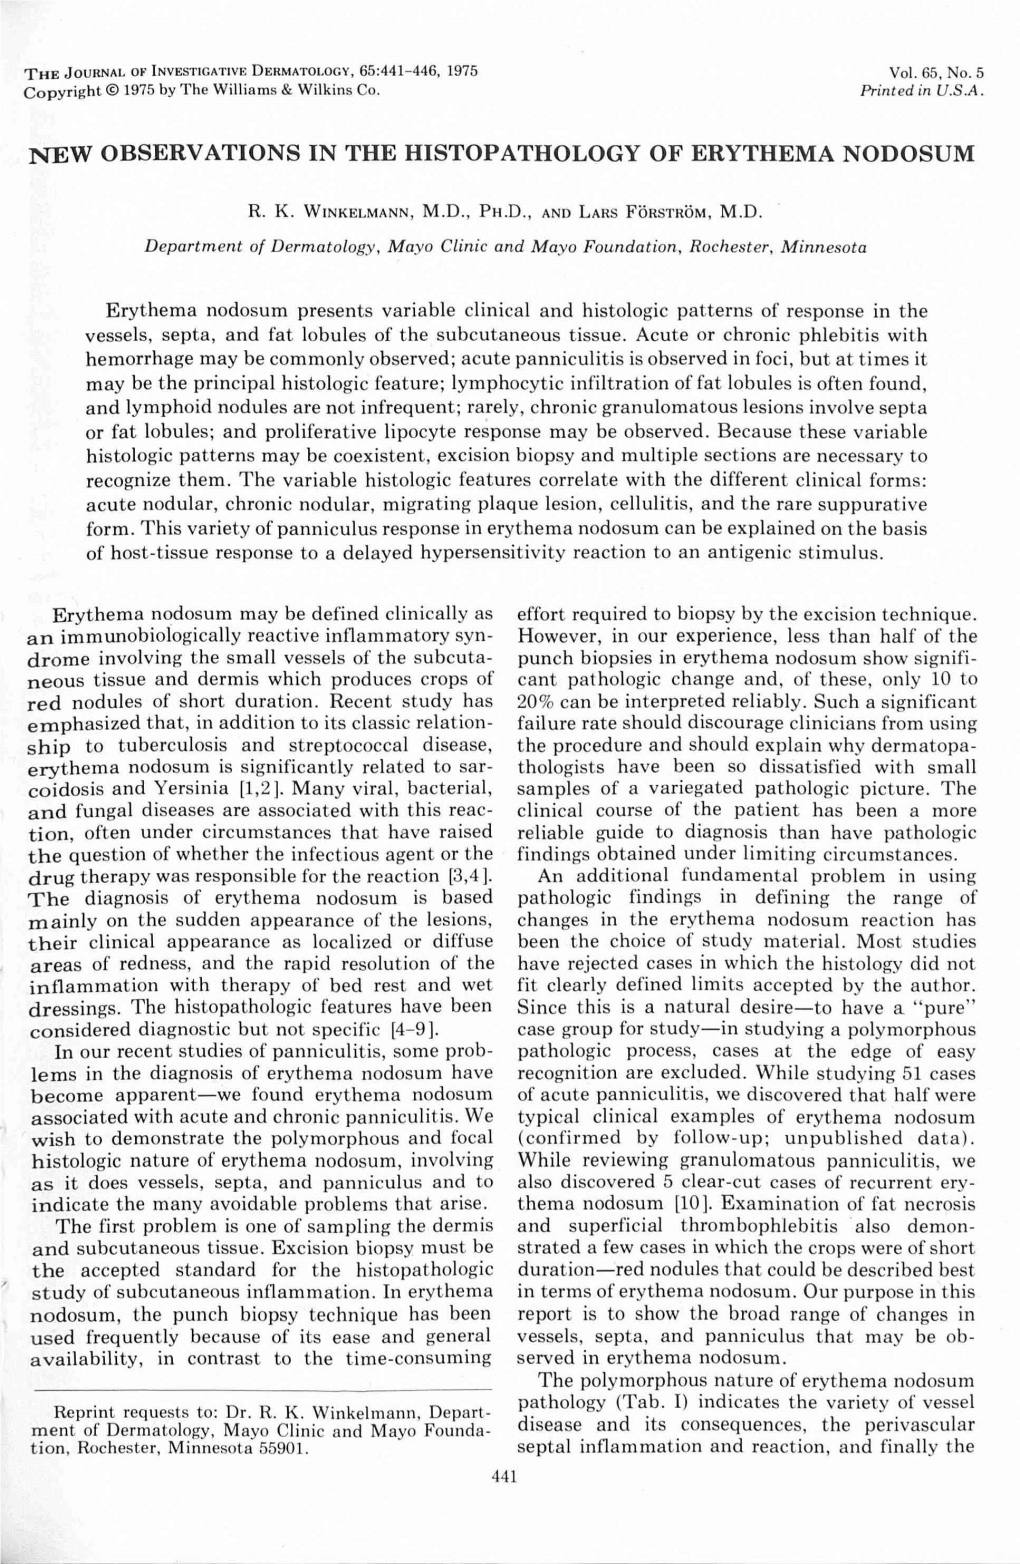 New Observations in the Histopathology of Erythema Nodosum